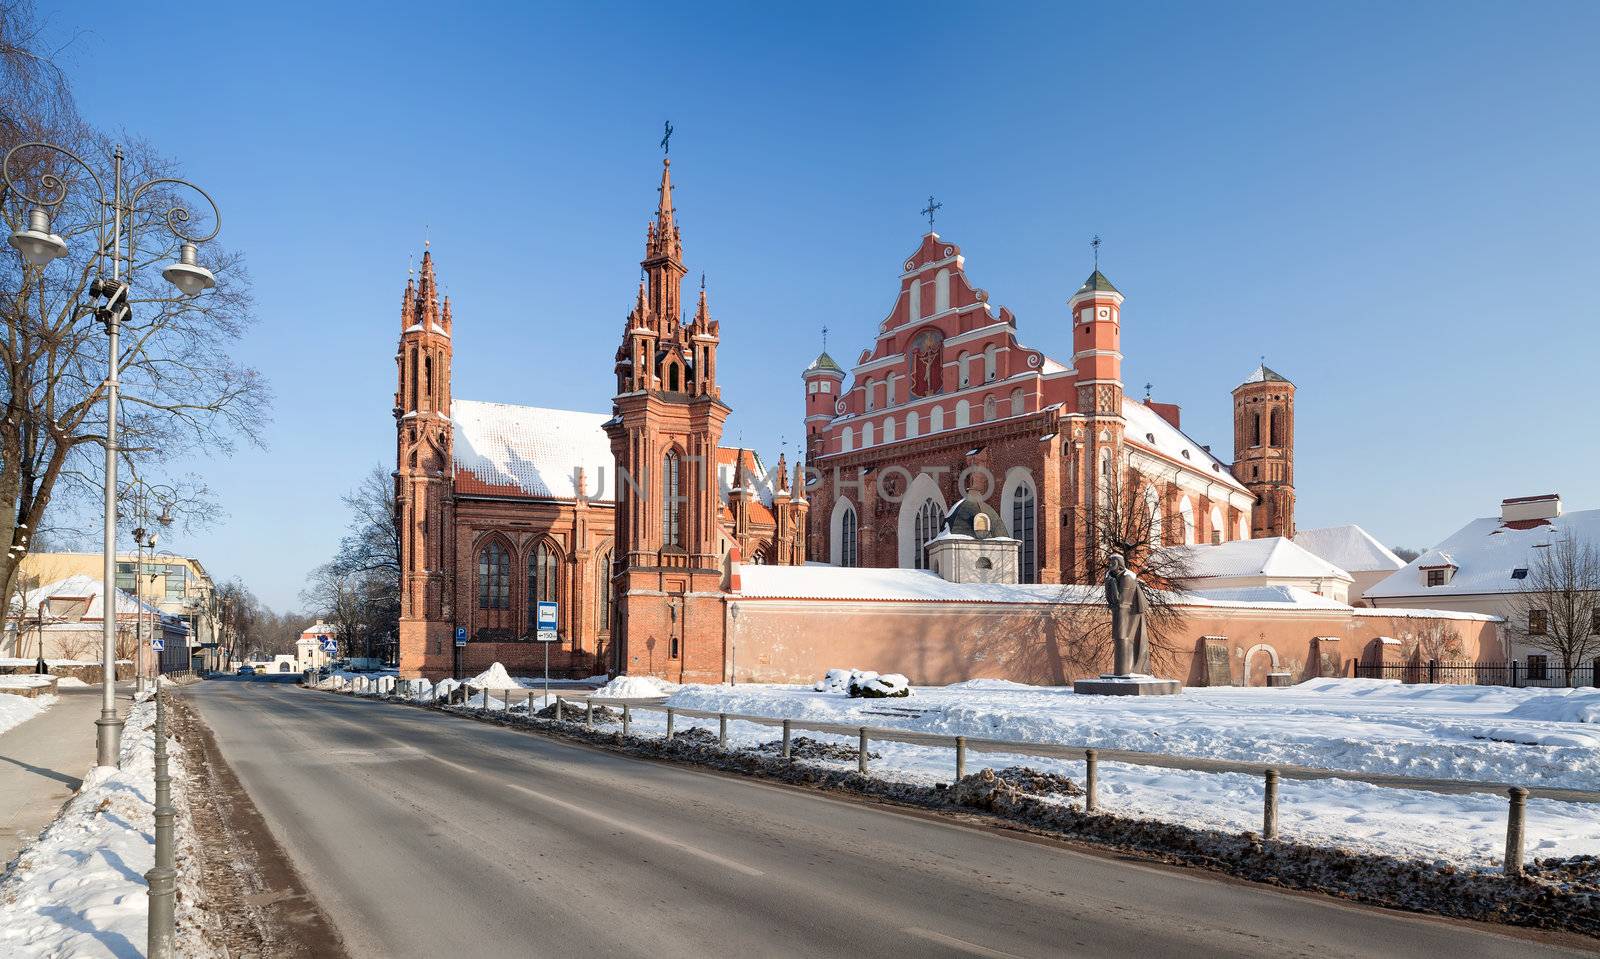 St. Anne's and Bernadine's Churches in Vilnius by vladimir_sklyarov